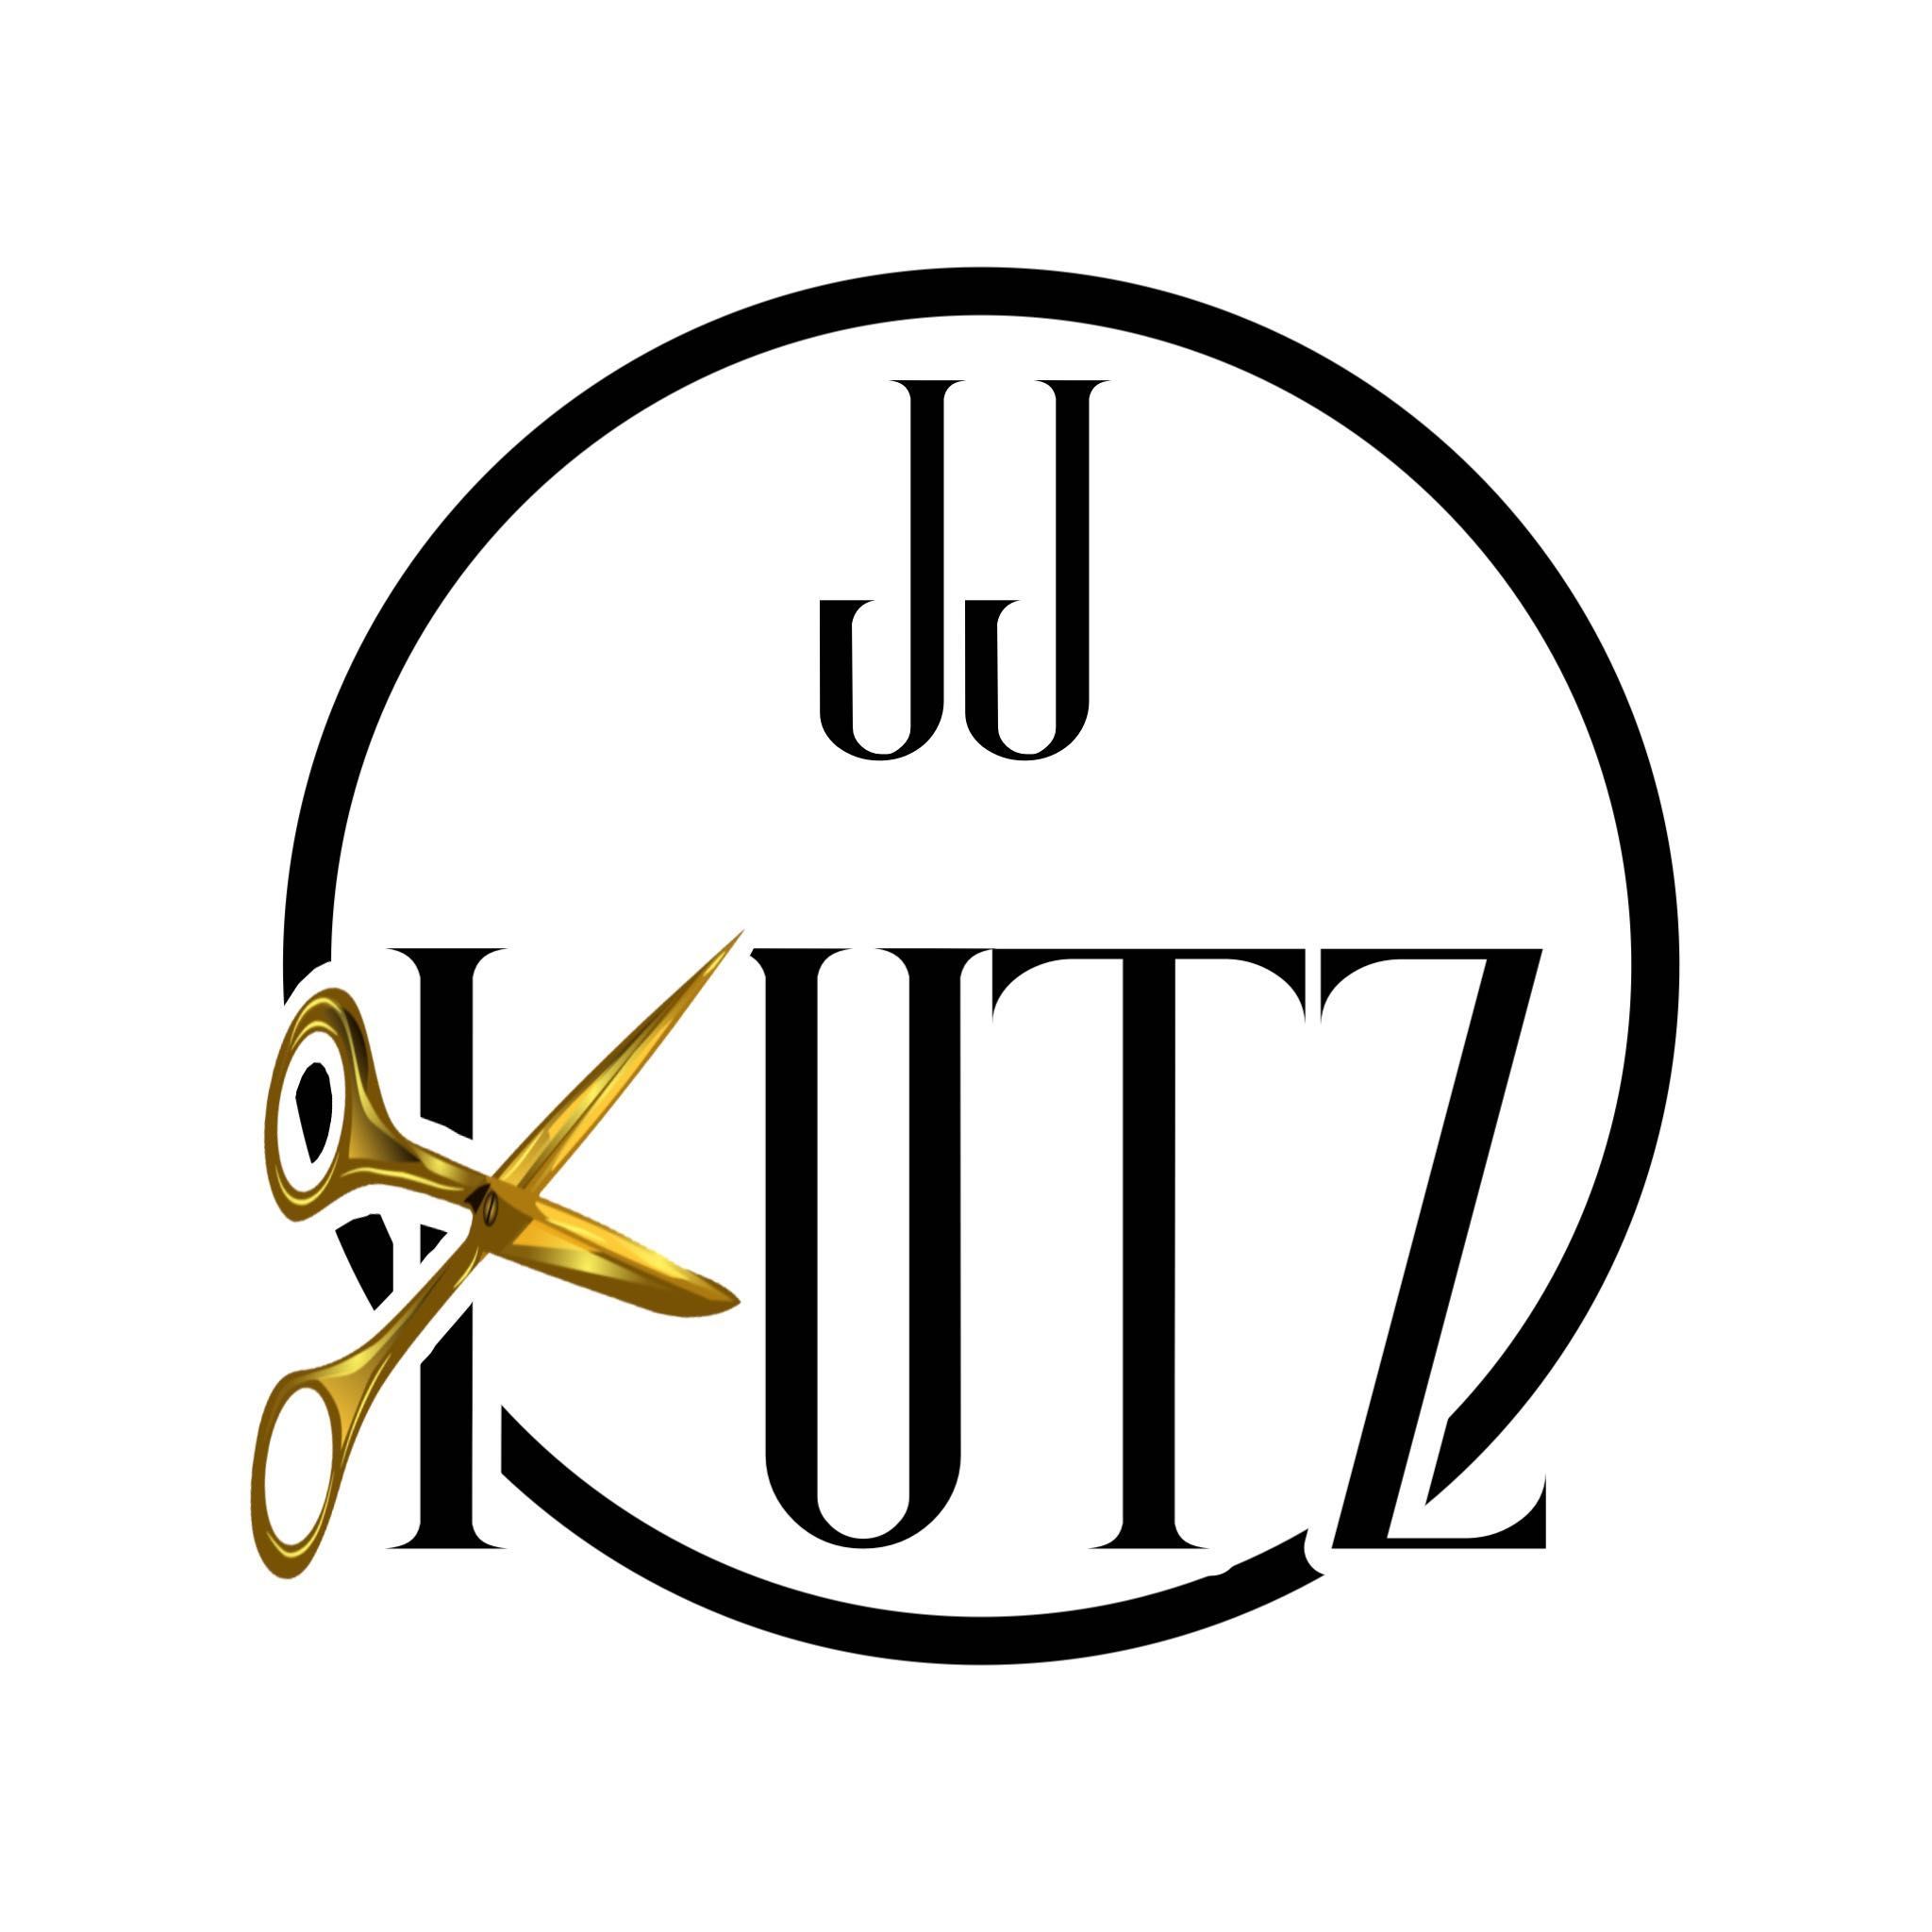 JJKUTZ, 2020 Katy Hockley Cut Off Rd, Katy, 77493